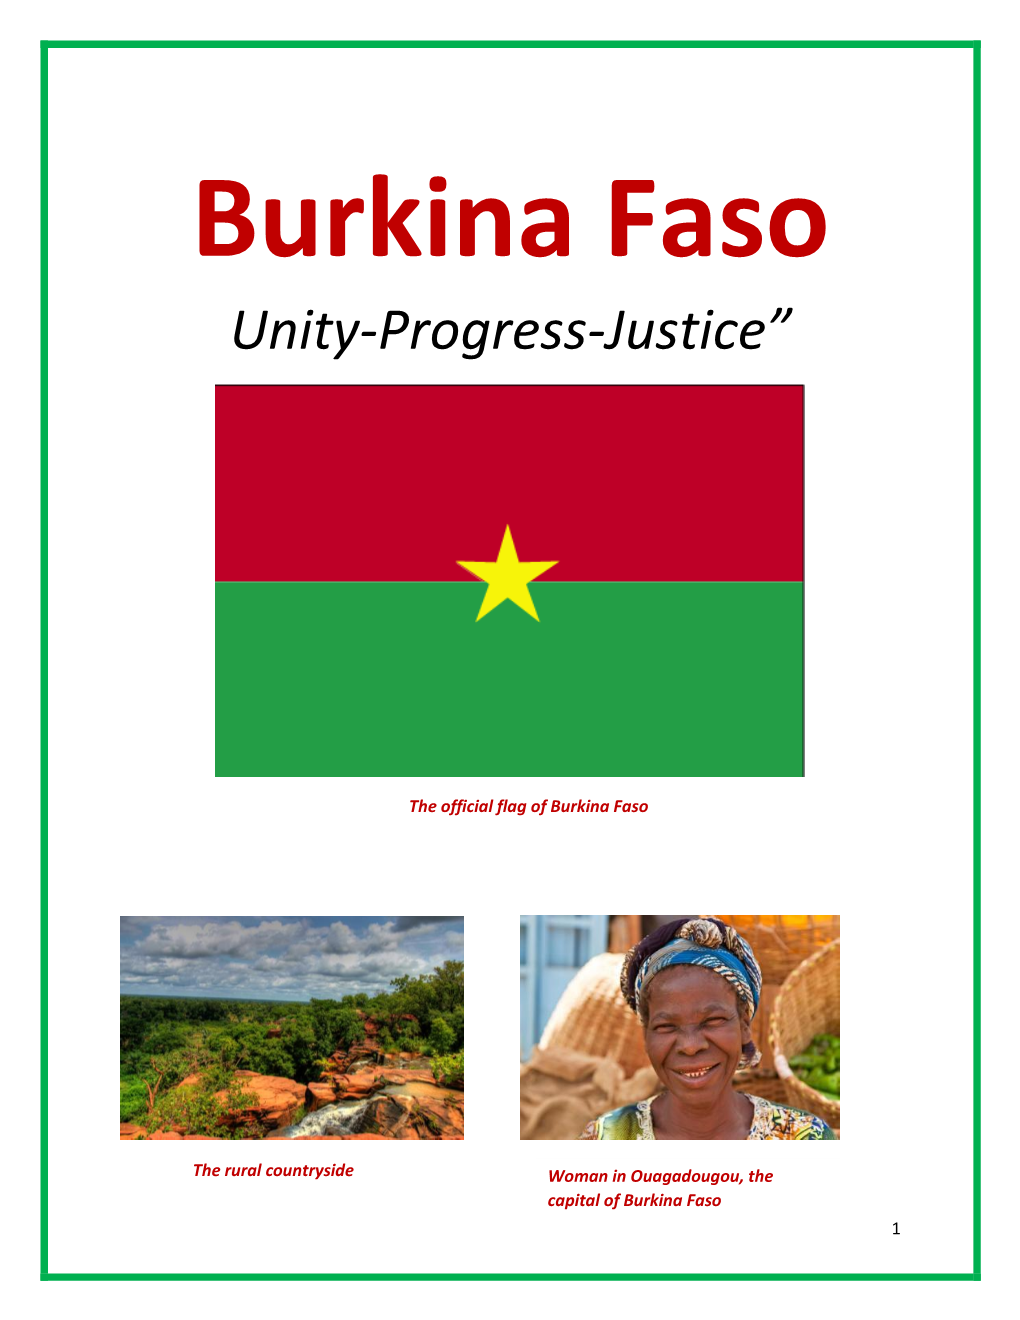 Unity-Progress-Justice” Burkina Faso